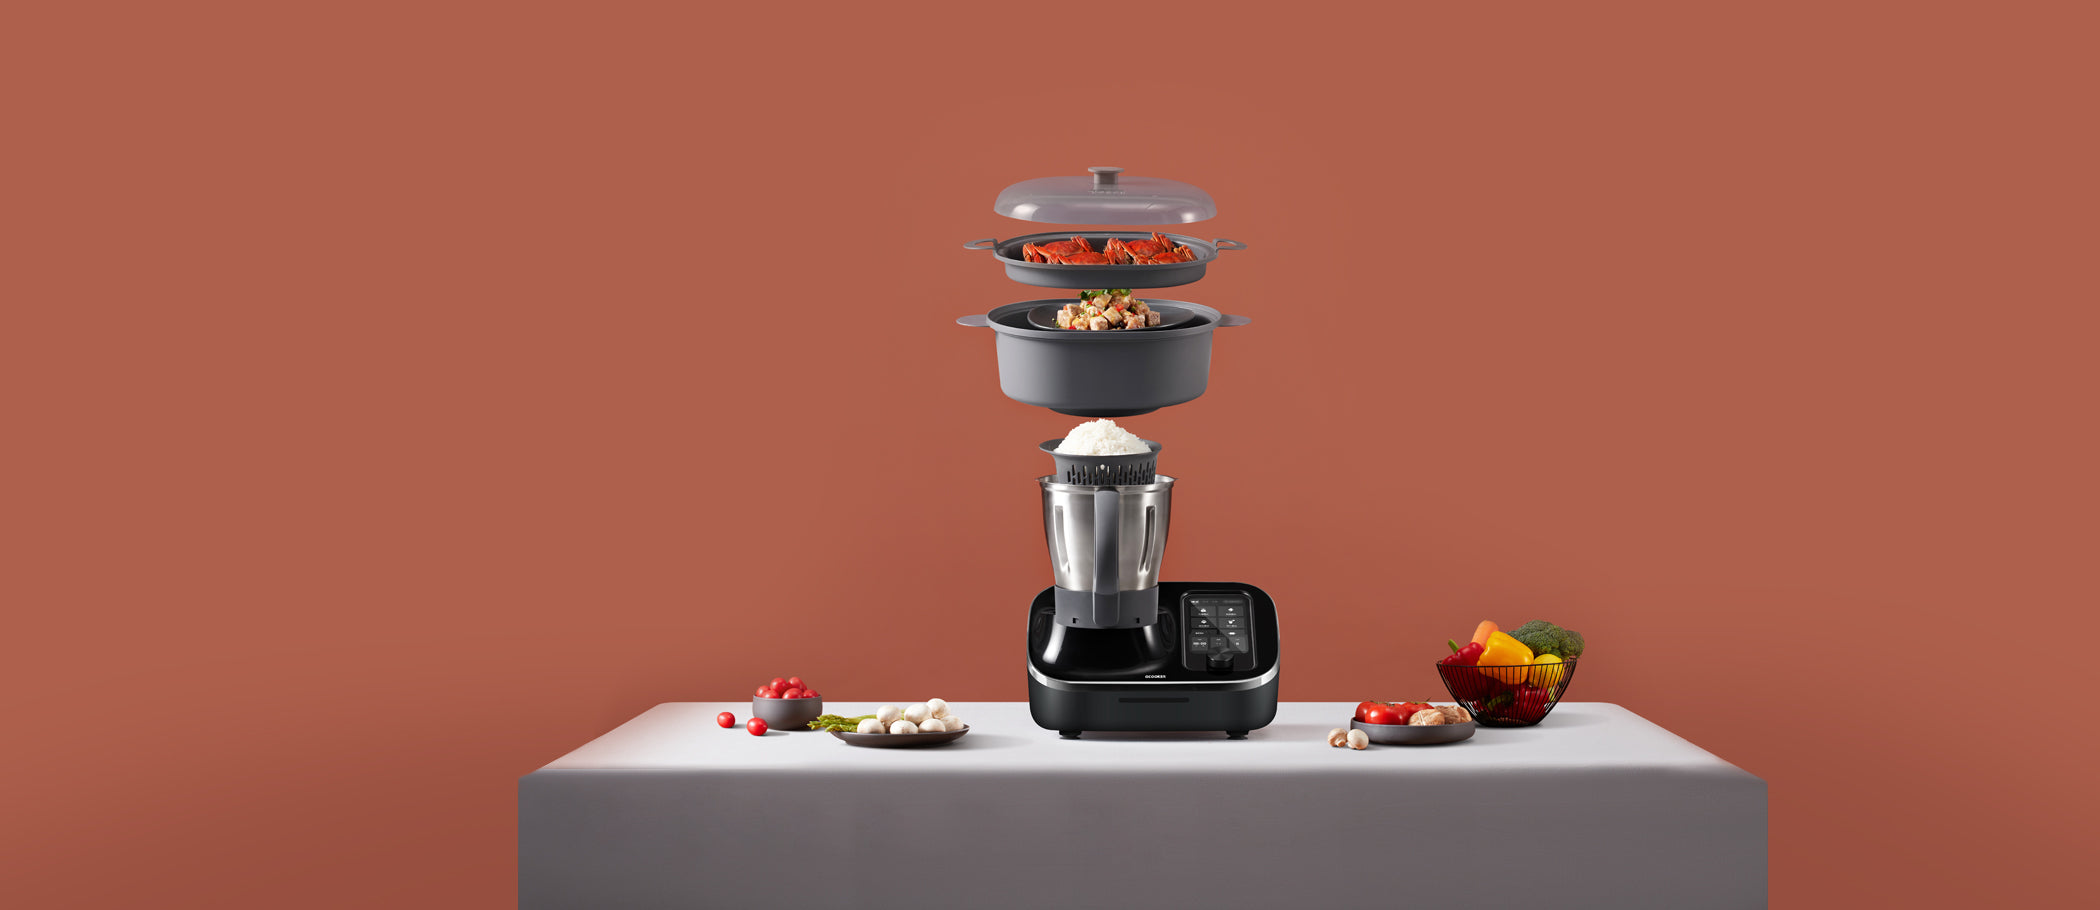 TOKIT Omni Cook Chef Robot - Máquina de cocina inteligente, batidora de  pie, olla de cocción lenta, picadora, licuadora, sopa, amasar, saltear,  hacer